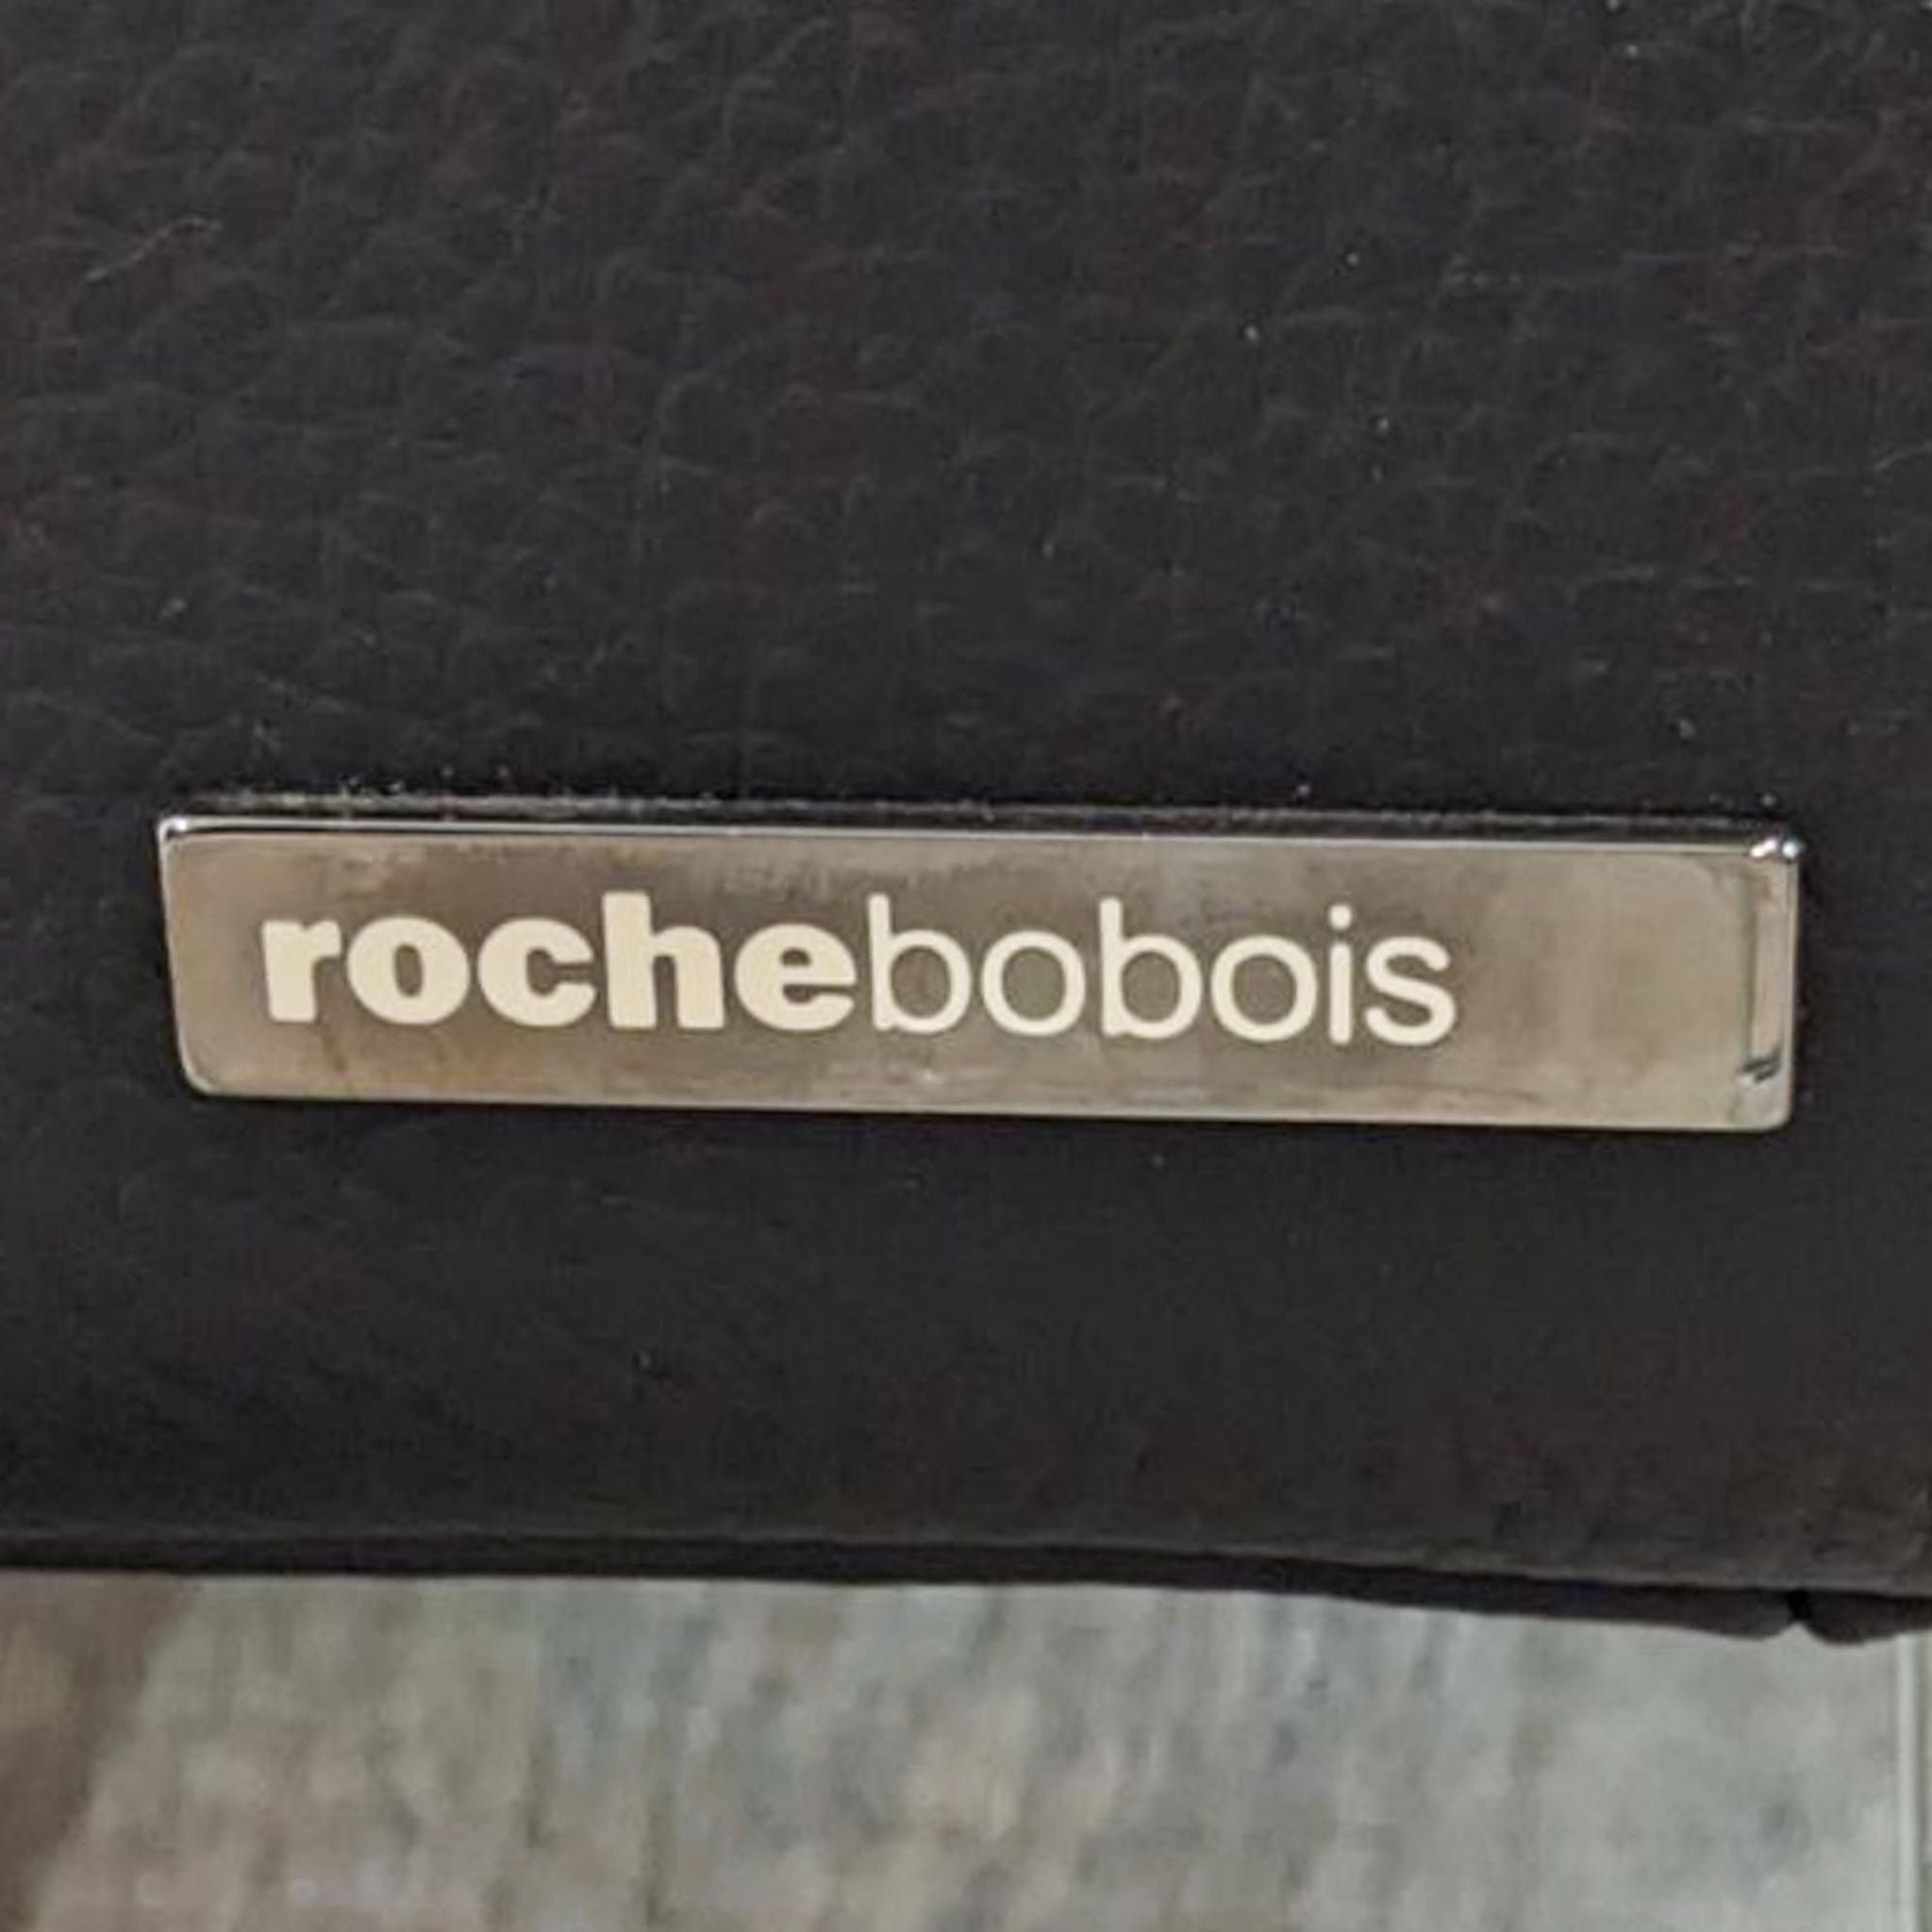 Close-up of Roche Bobois logo on black leather loveseat showcasing brand identity.